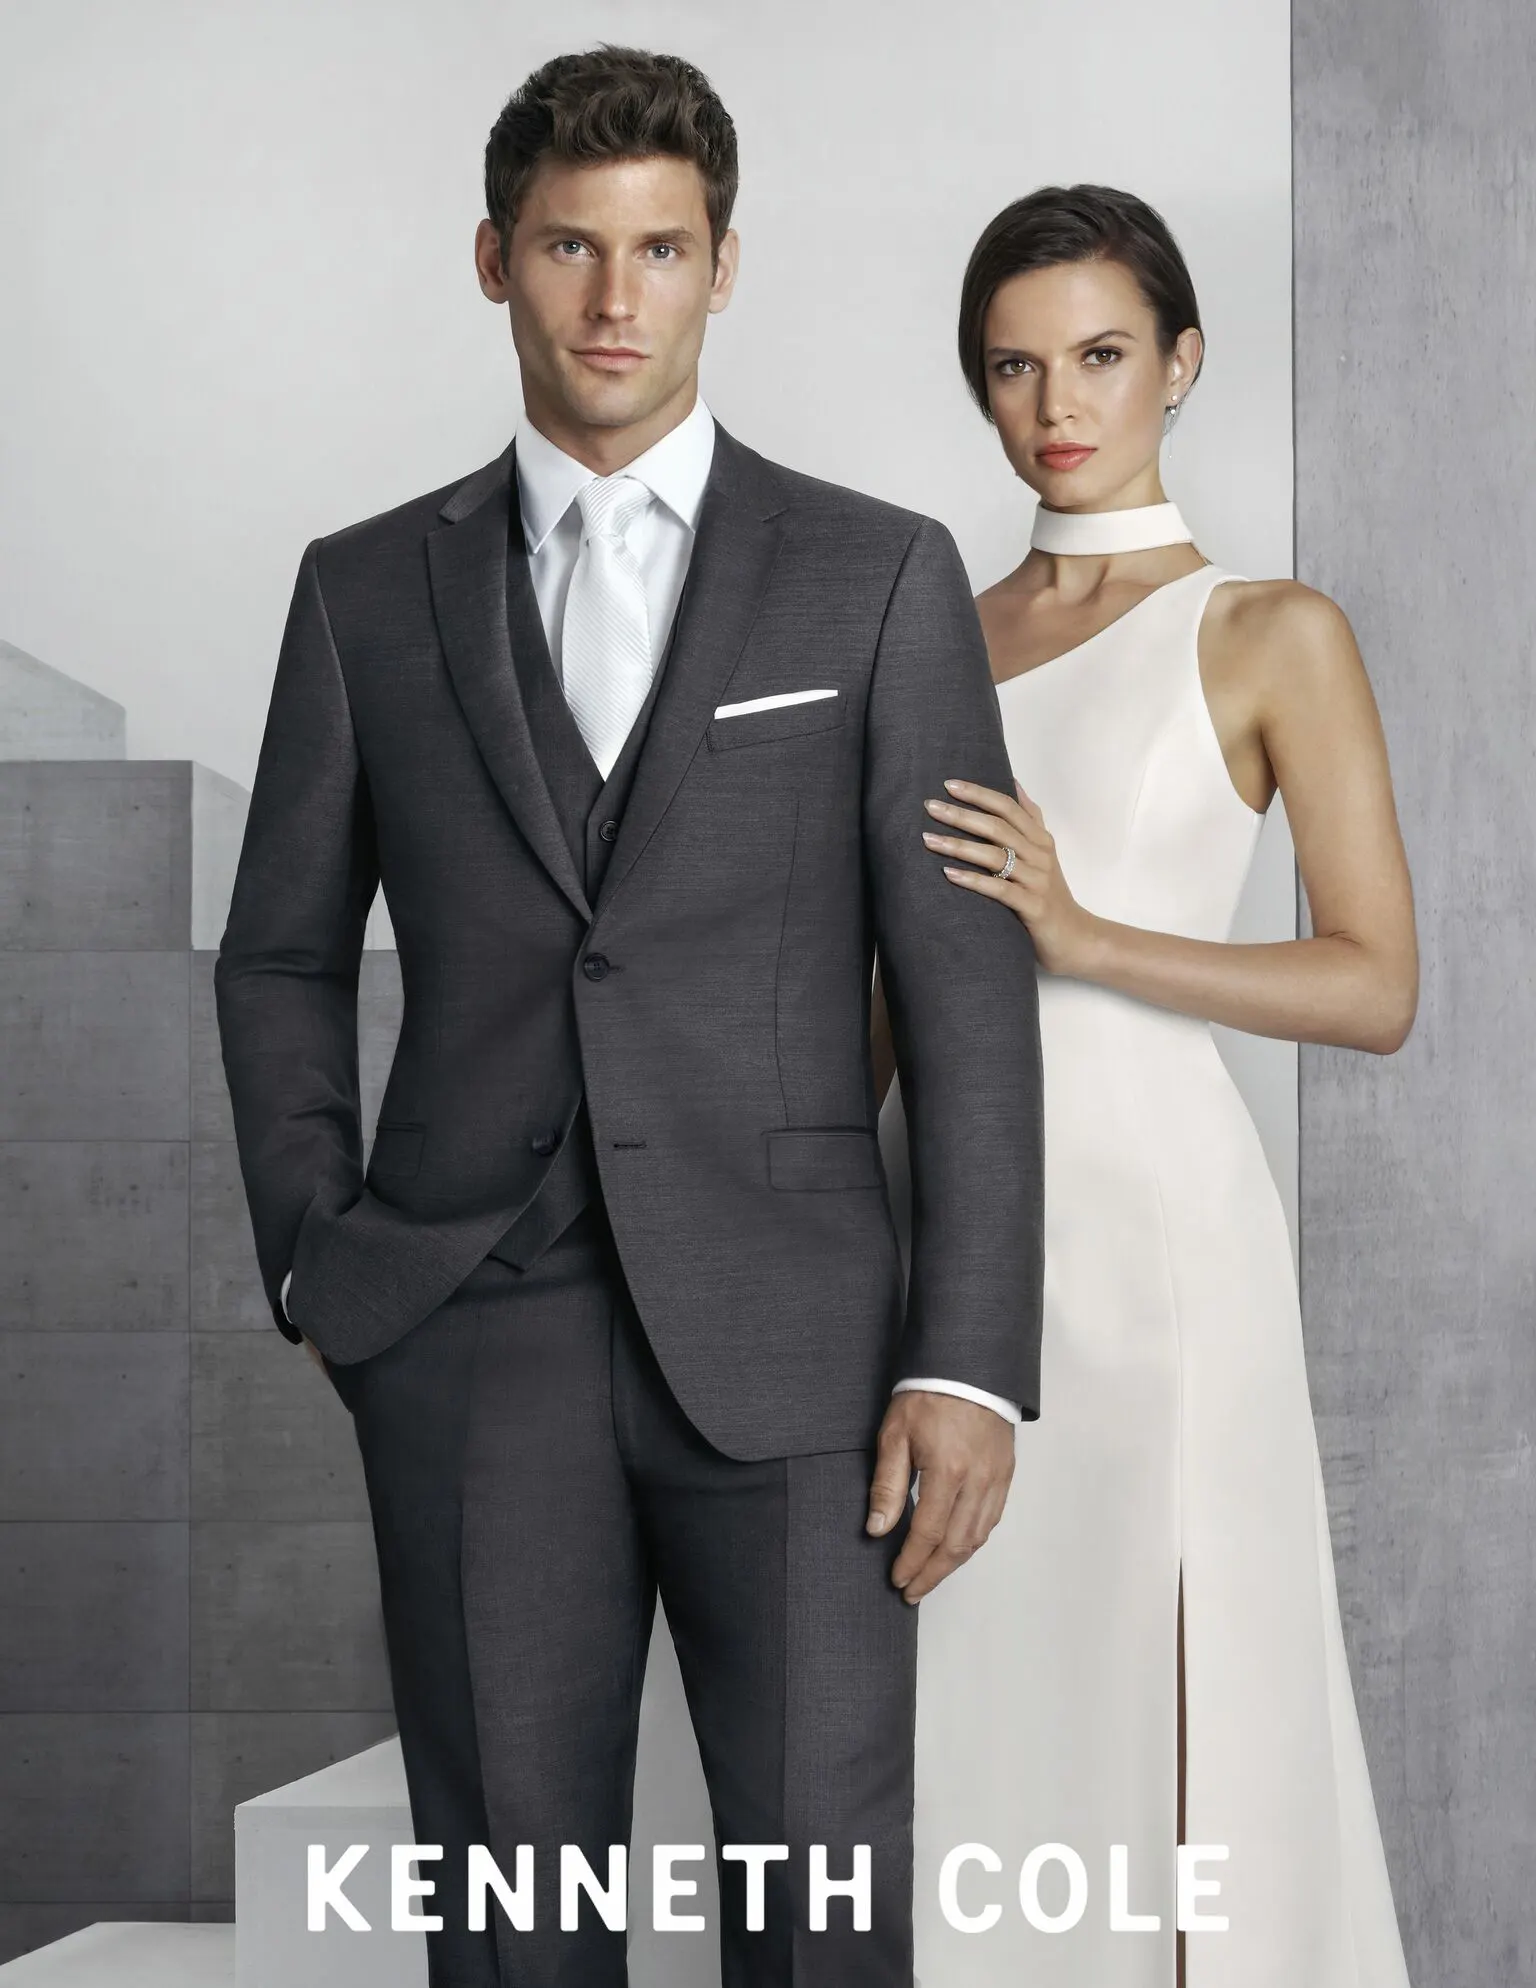 man wearing black three piece suit and white tie, woman wearing white dress and matching choker